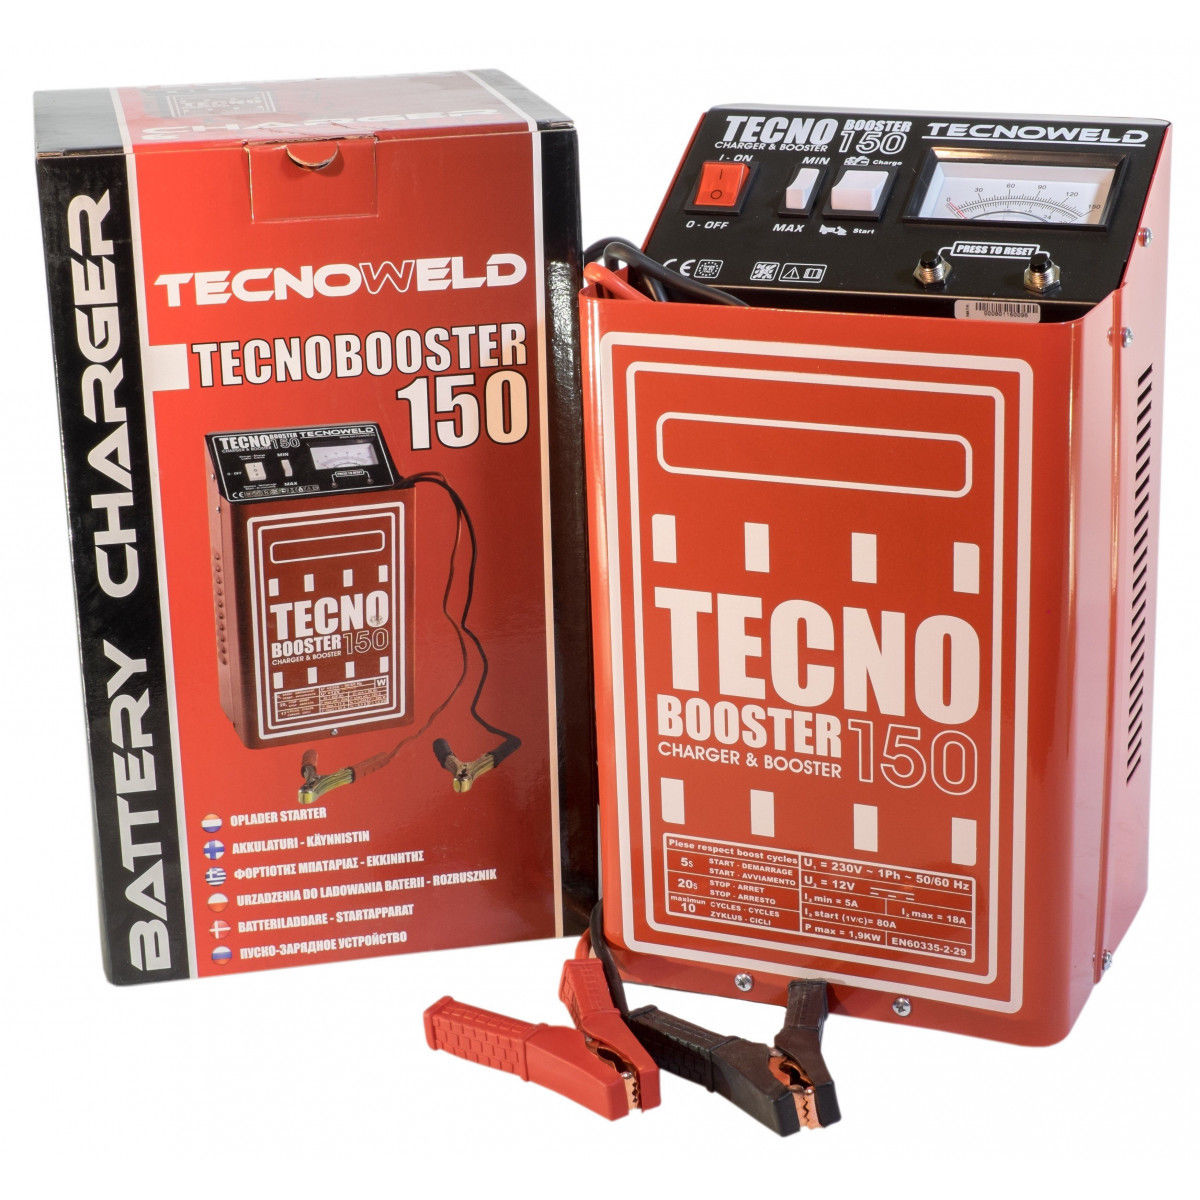 Chargeur Demarreur Tecnobooster Batterie 25/ 250a -10/270ah Compact 1900w